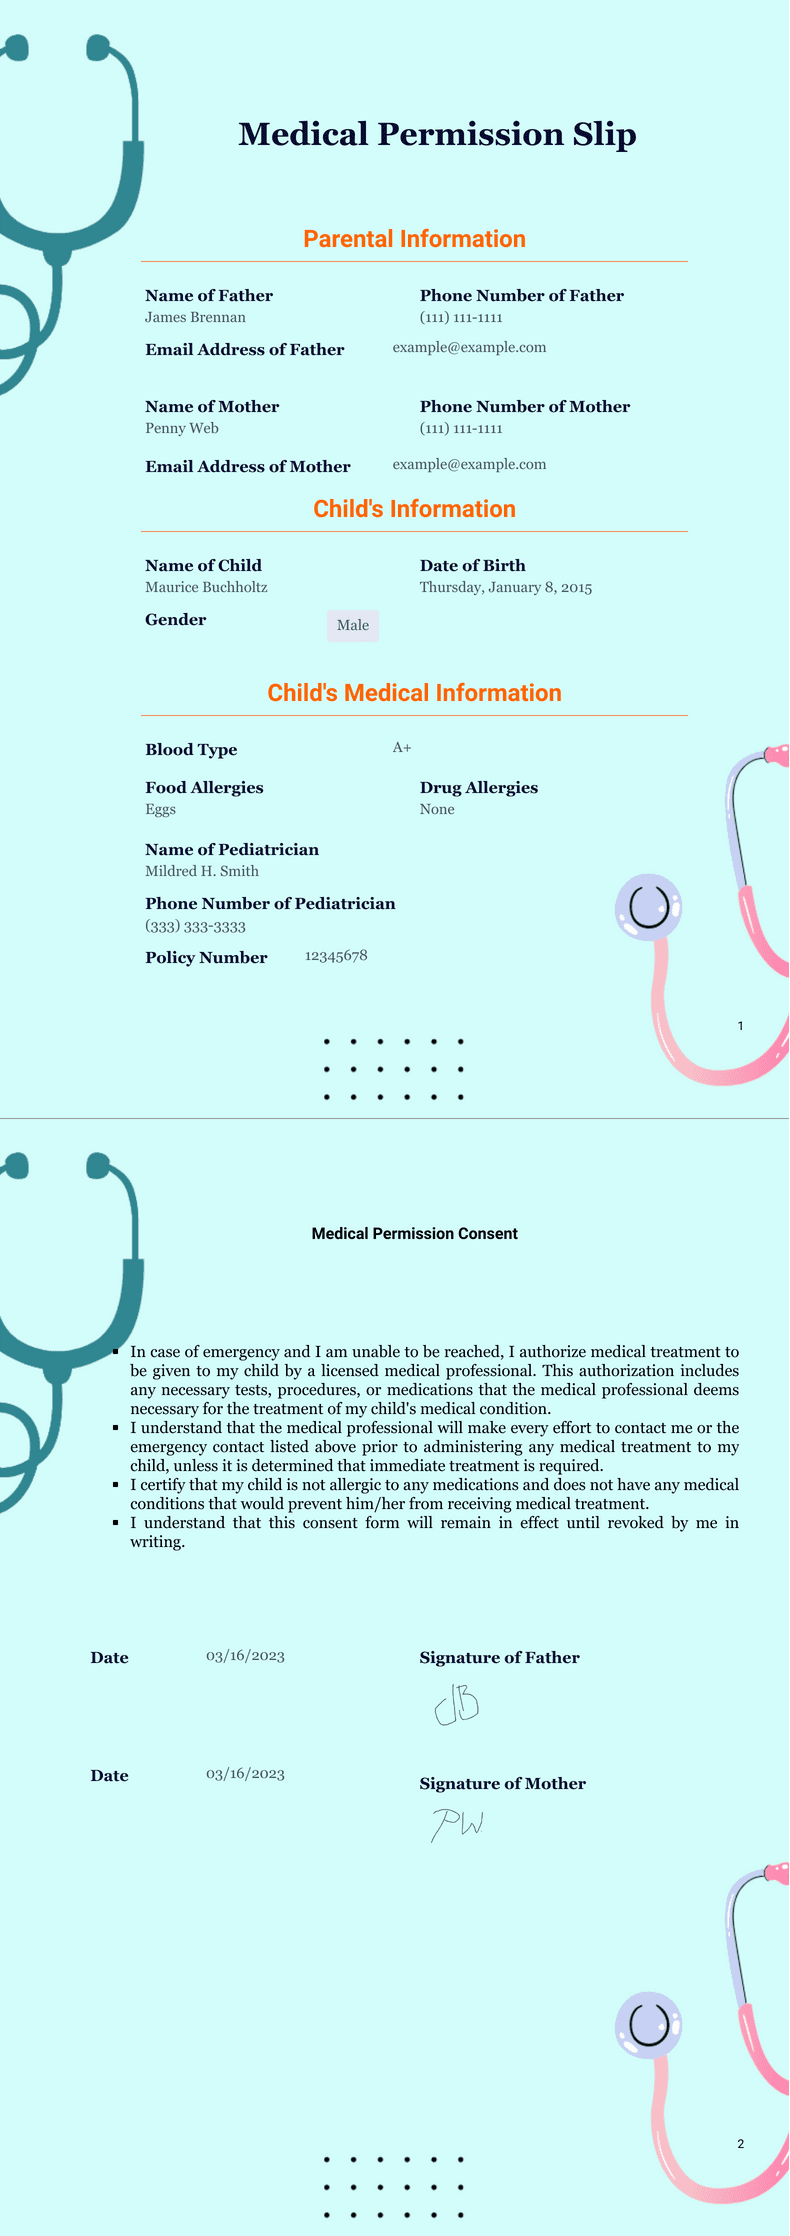 Medical Permission Slip